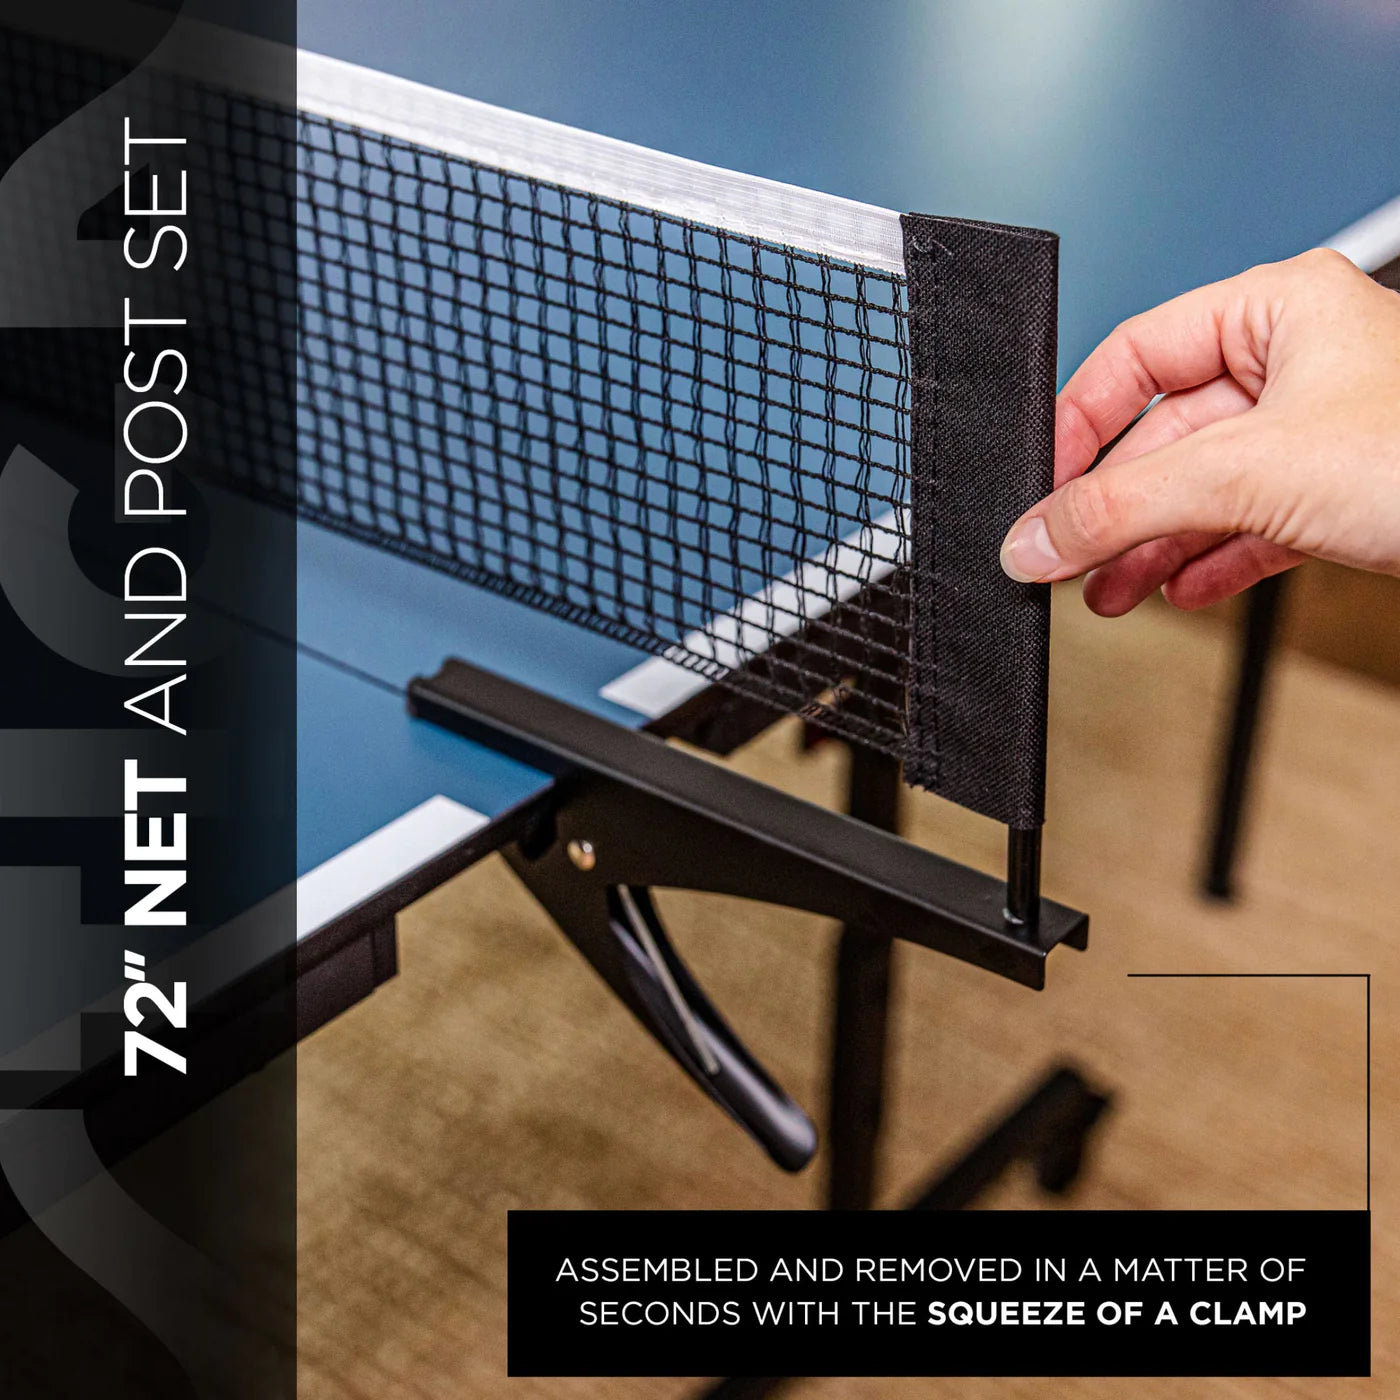 STIGA Advantage Lite Table Tennis Table